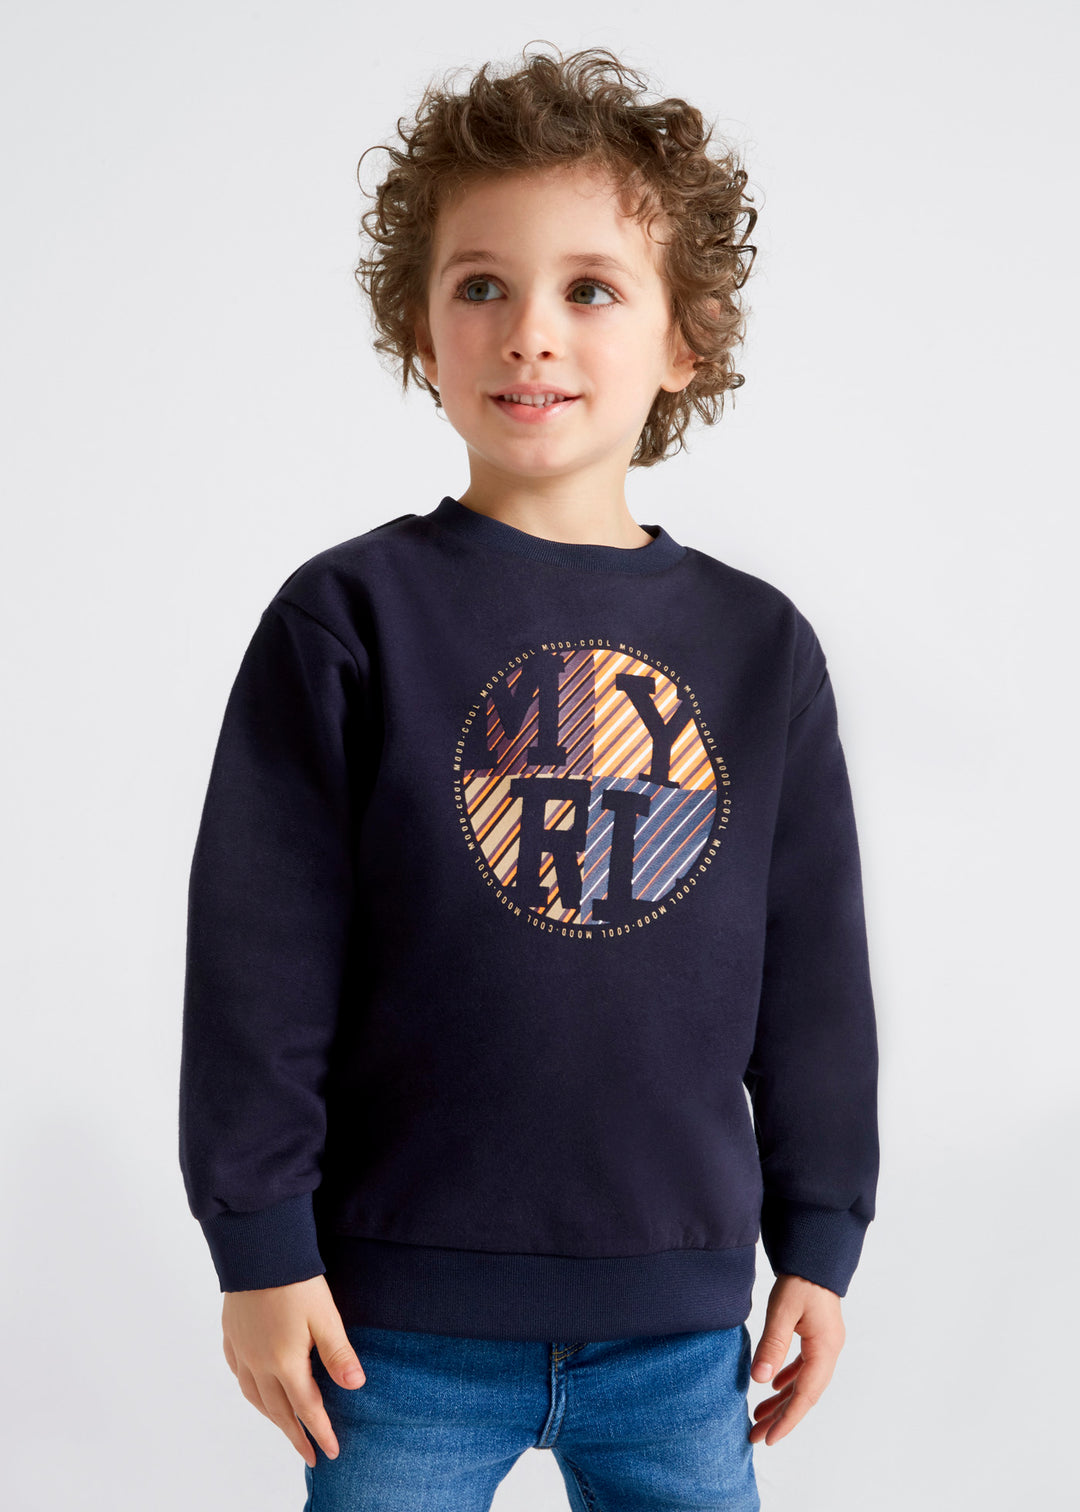 Mayoral 4447-080 Kids Graphic Sweatshirt - Navy